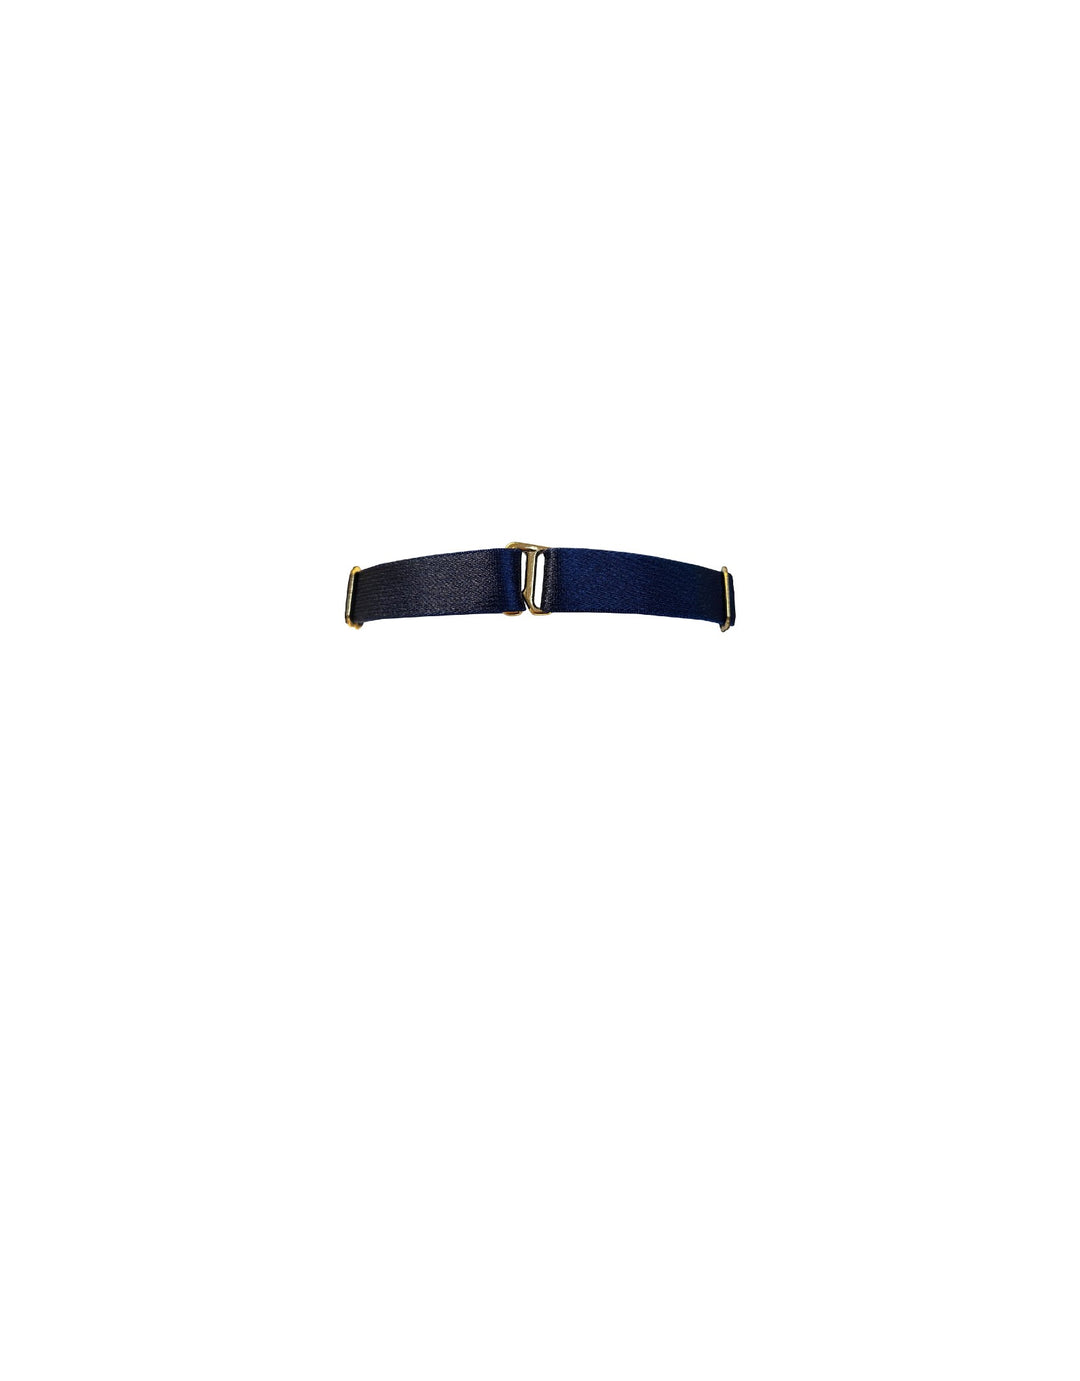 Bordelle Kleio Strap Collar Navy Blue